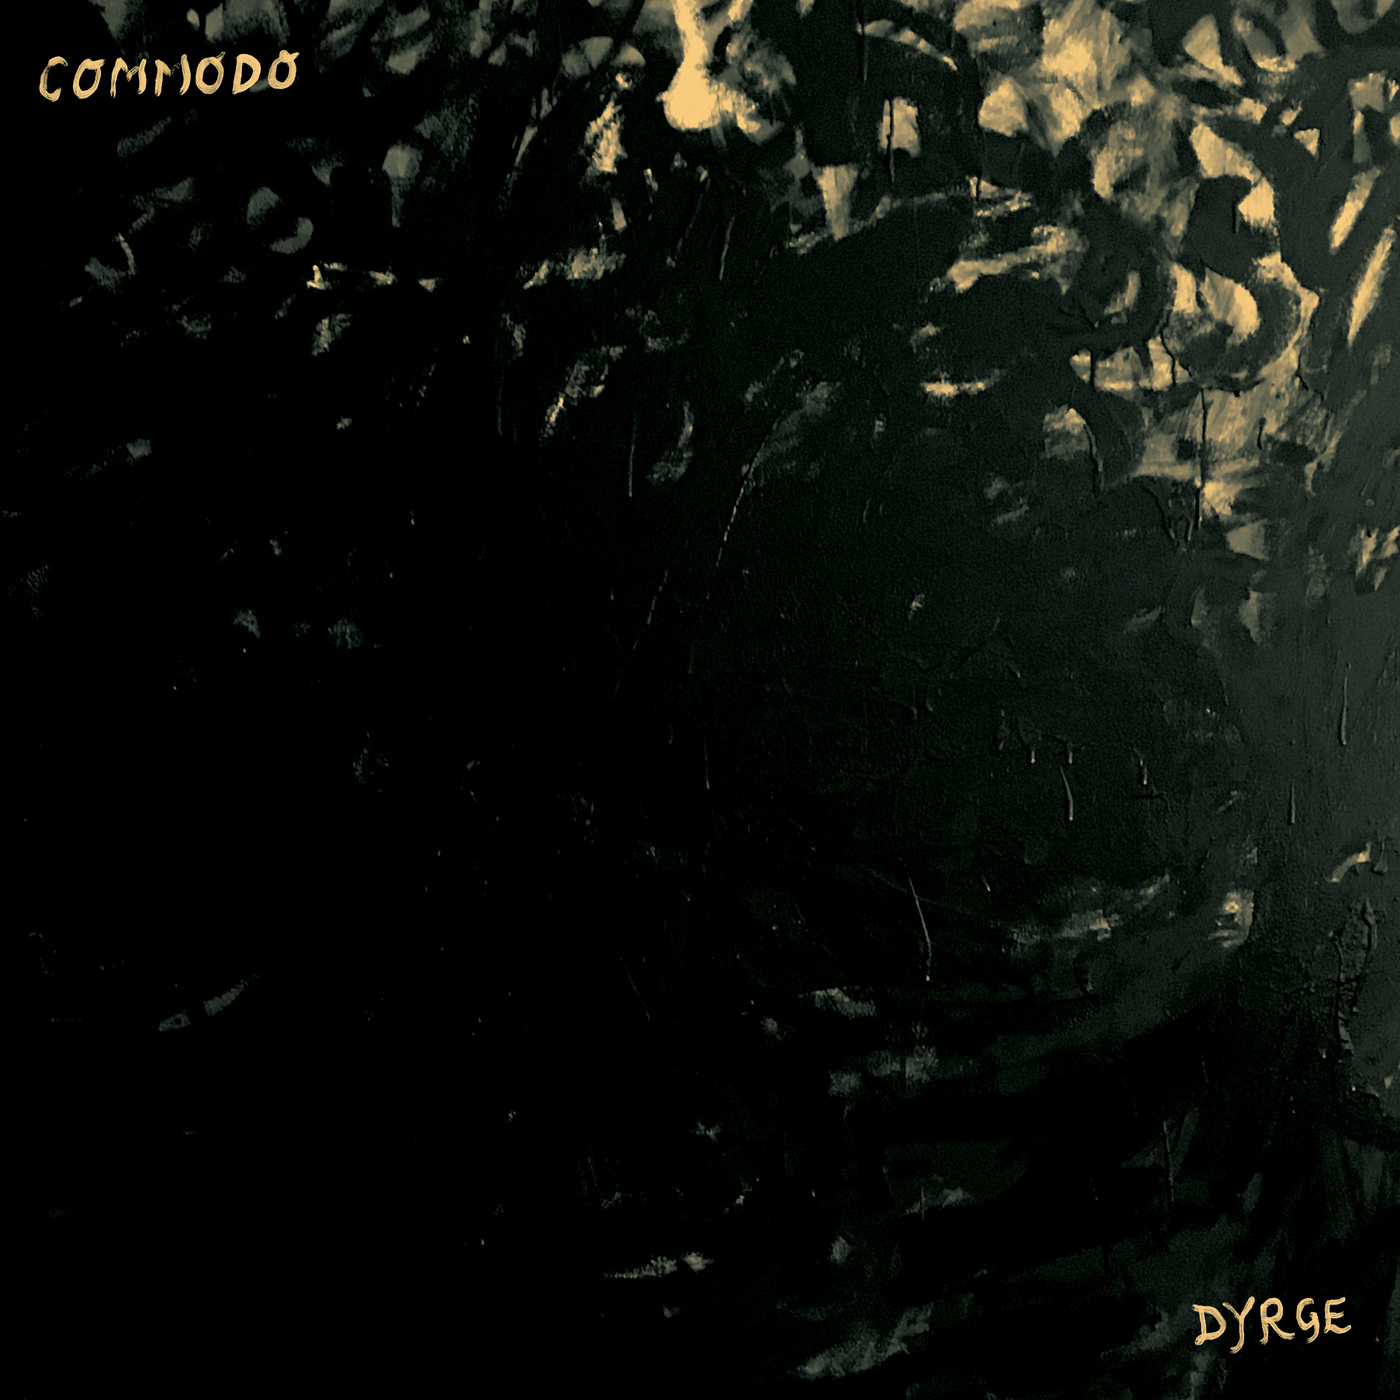 image cover: Commodo - Dyrge / Black Acre